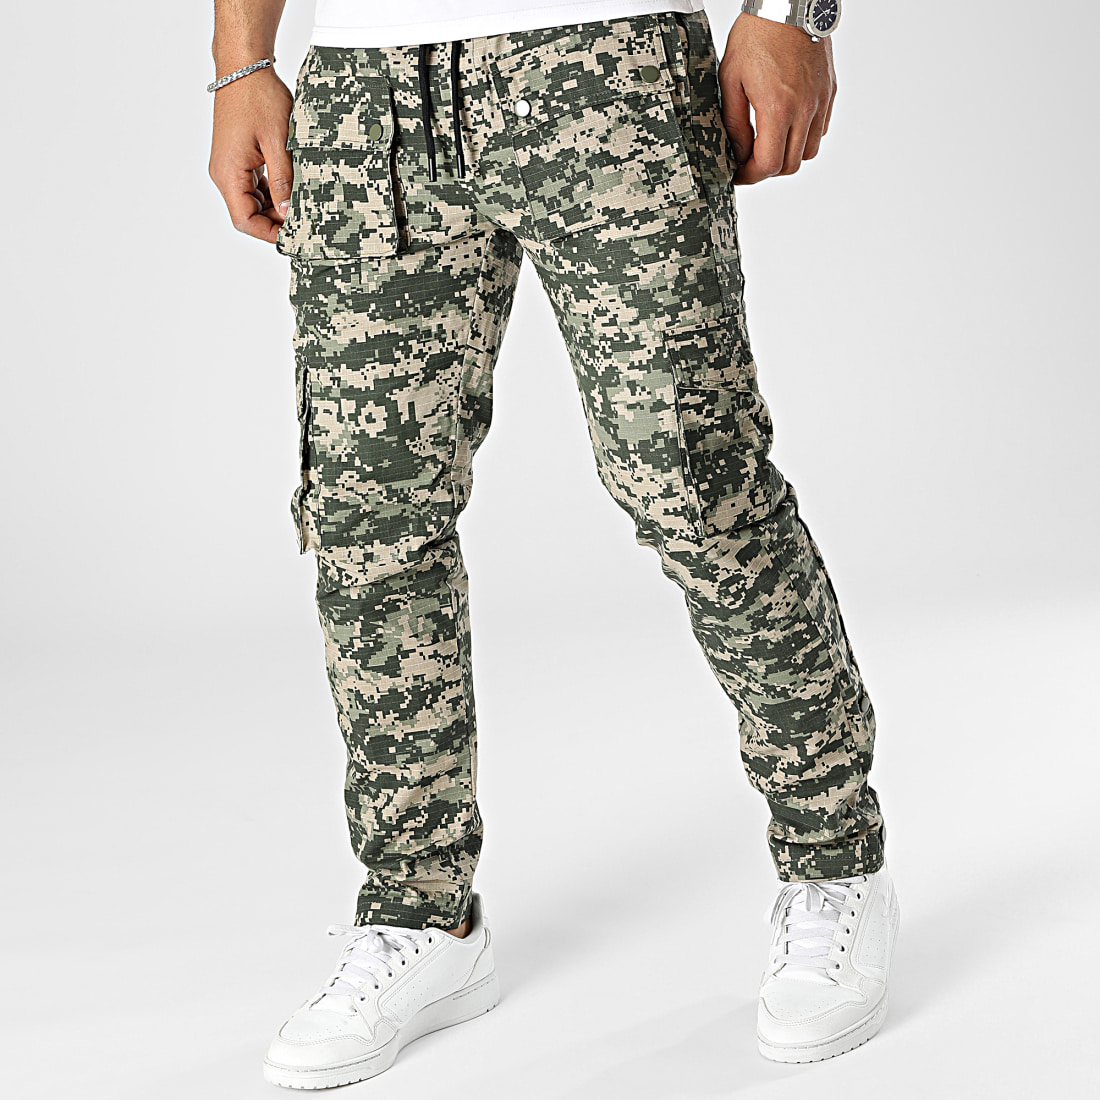 pantalon cargo style jogger pants motif camouflage kaki